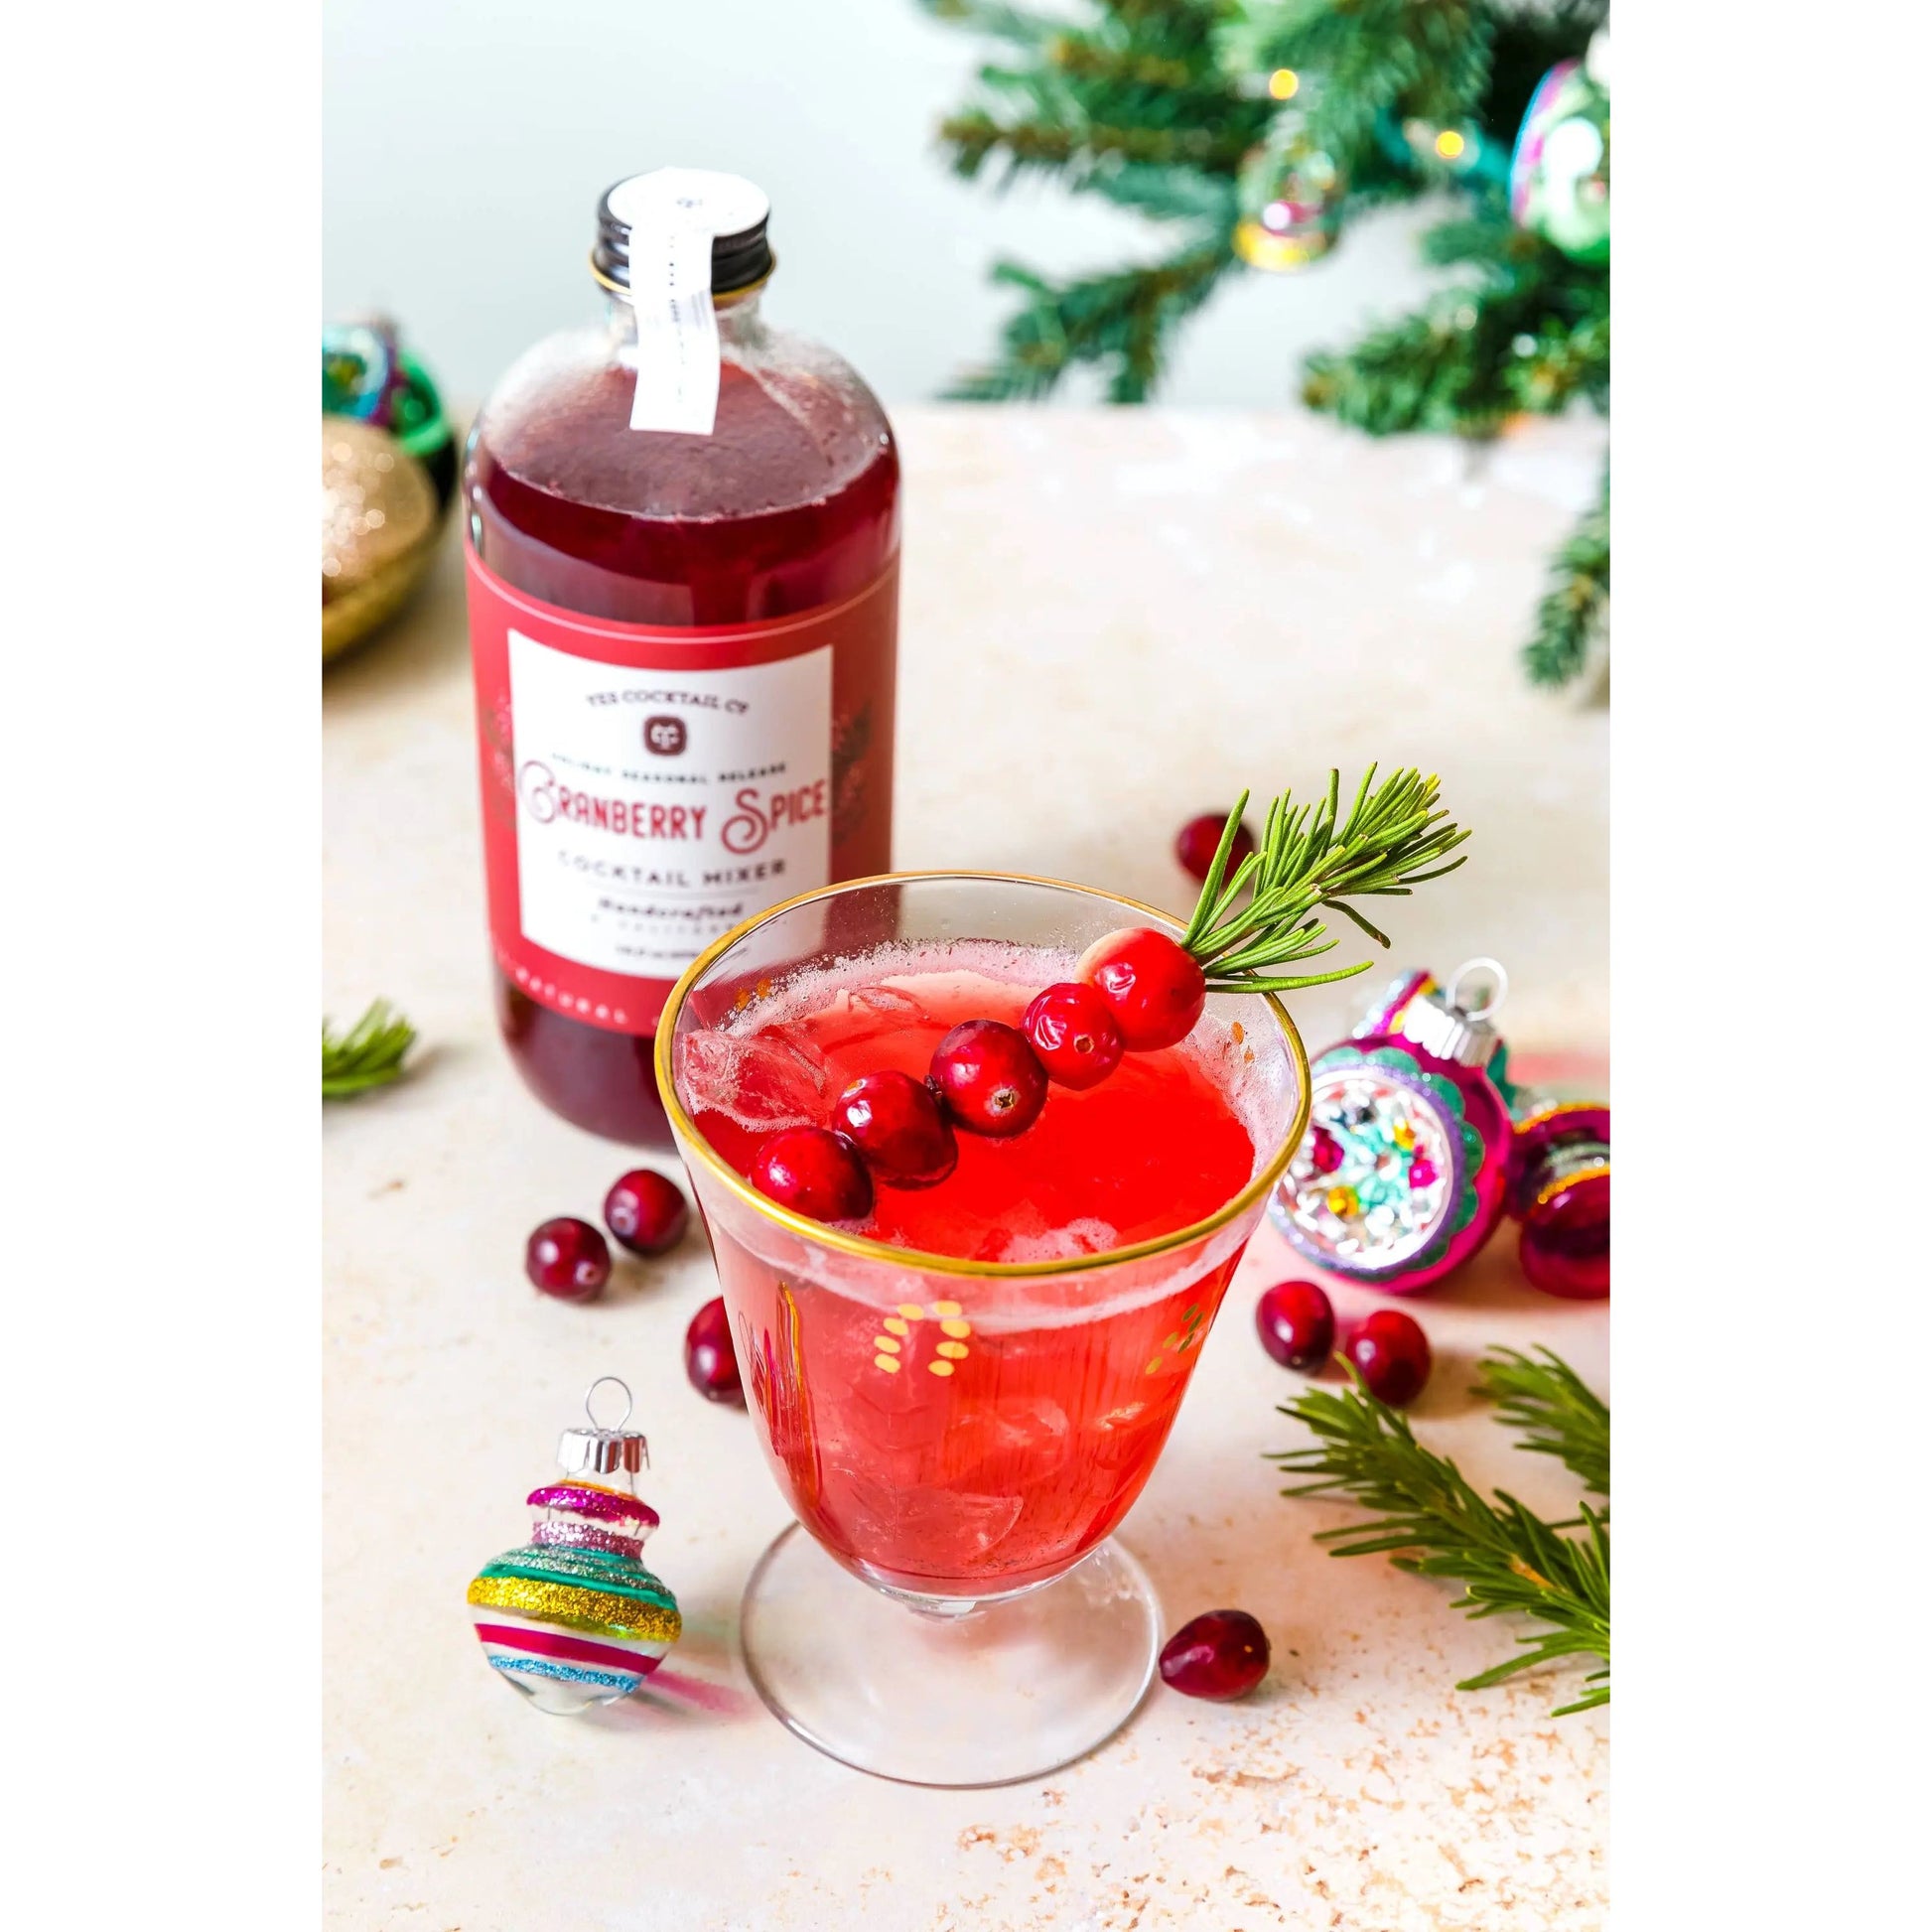 Holiday Seasonal : Cranberry Spice Cocktail Mixer Barware Browns Kitchen